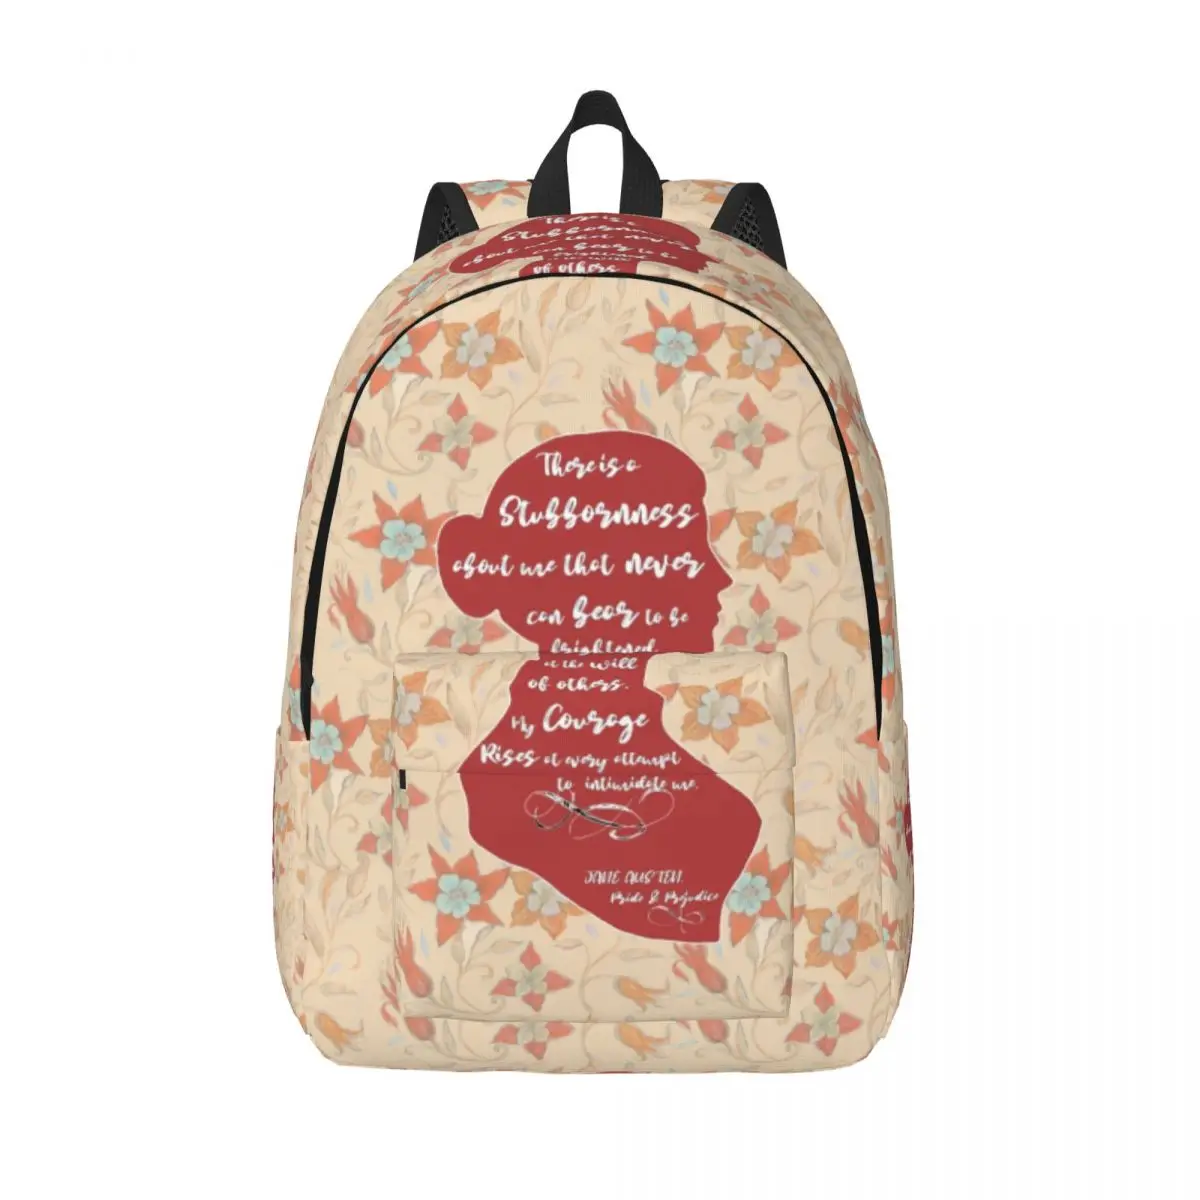 

Jane Austen Pride And Prejudice Quote Canvas Backpacks for Women Men College School Students Bookbag Fits 15 Inch Laptop Bags